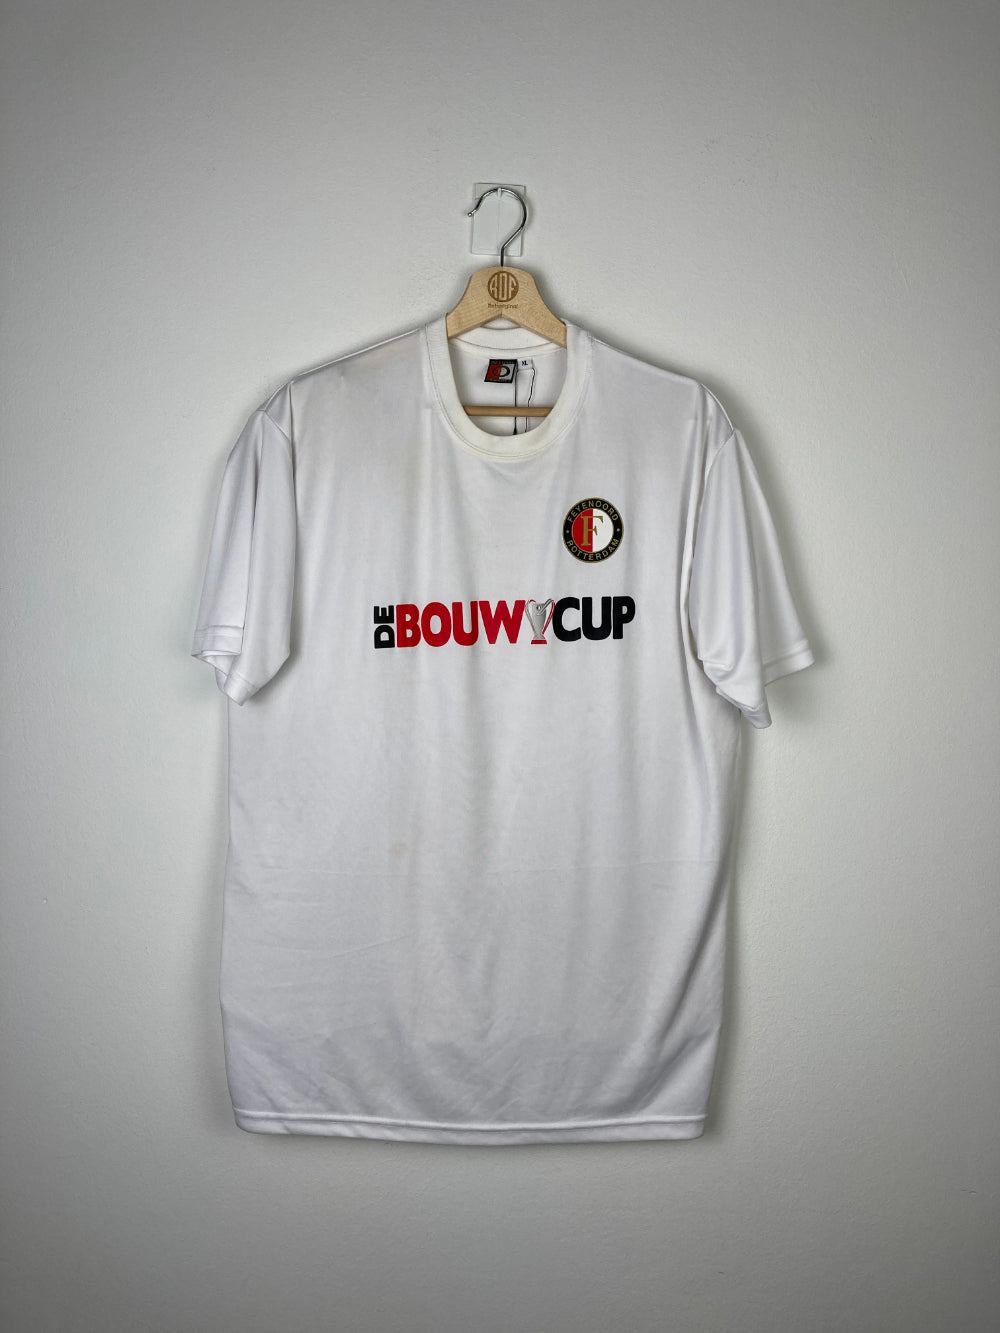 Original Feyenoord Rotterdam Bouw Cup Jersey 2010's - XL